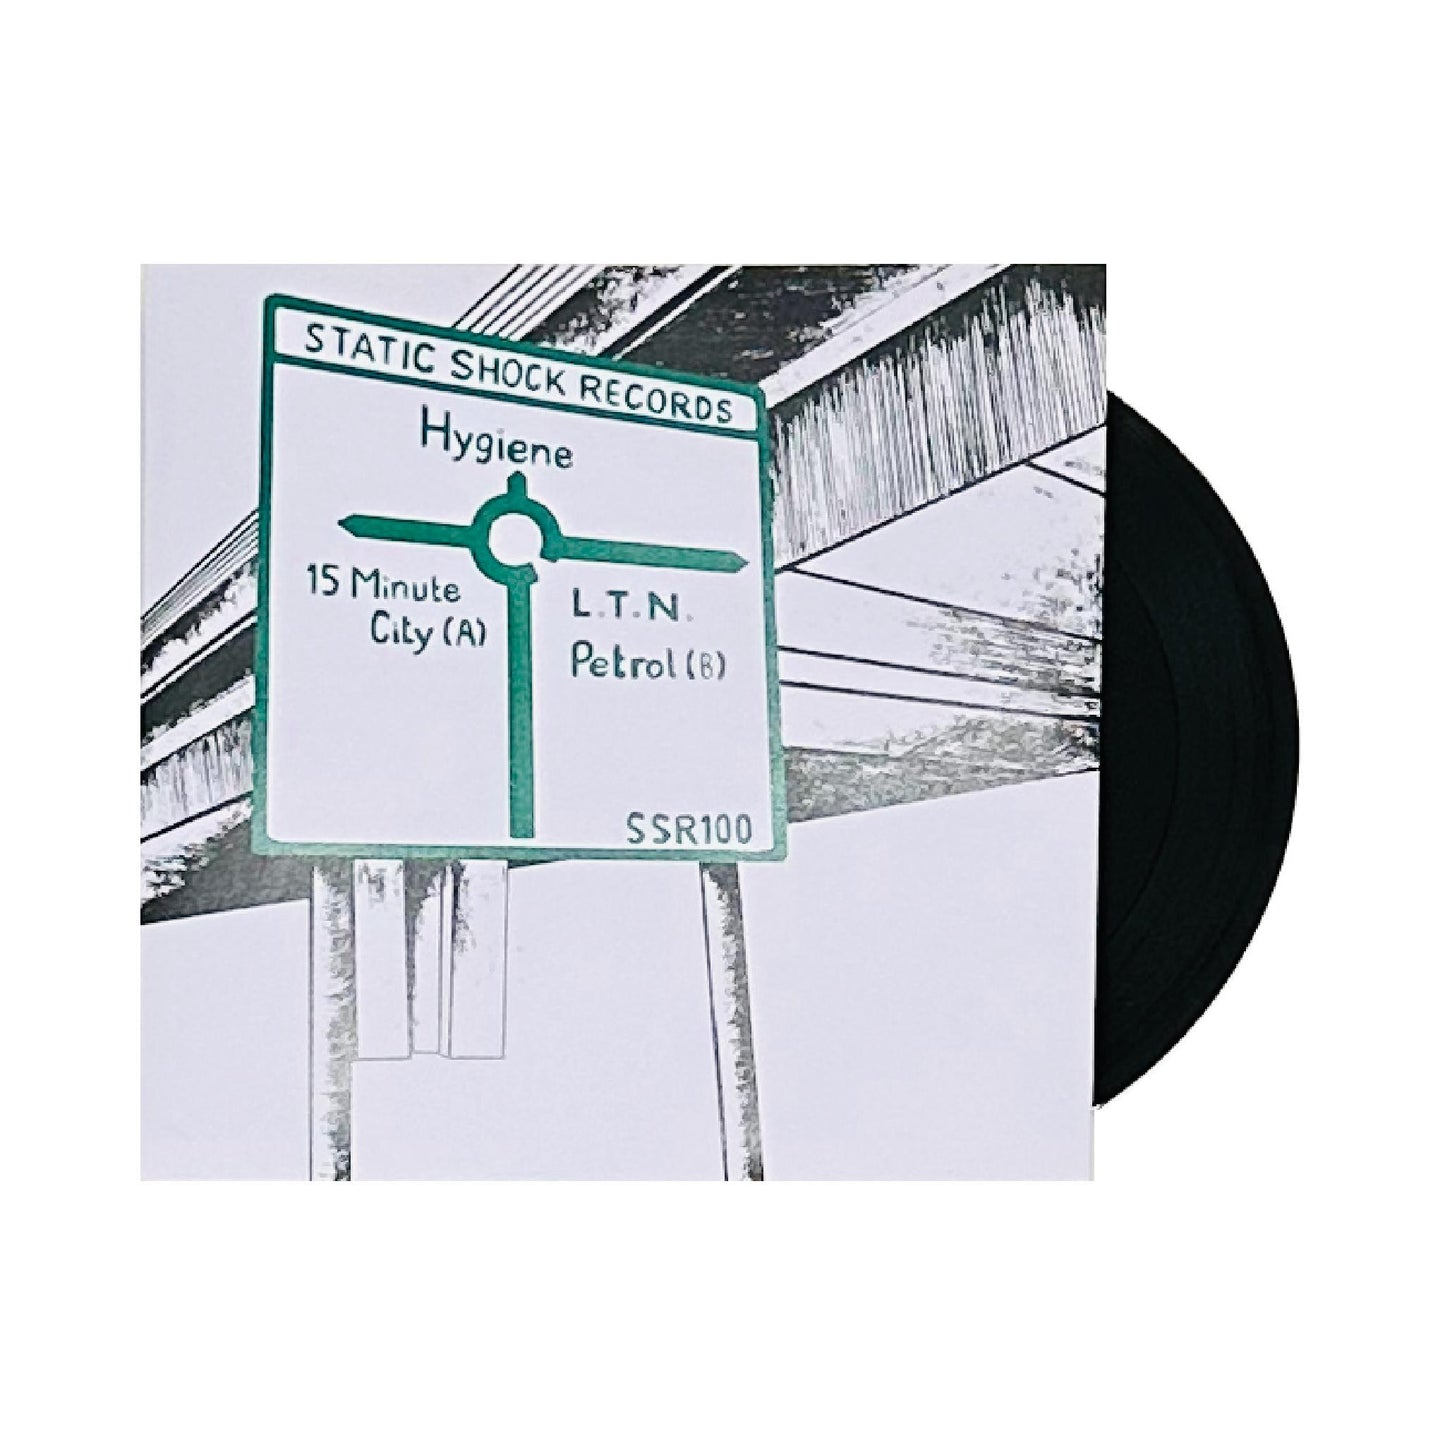 Hygiene - 15 Minute City 7" EP (black vinyl)